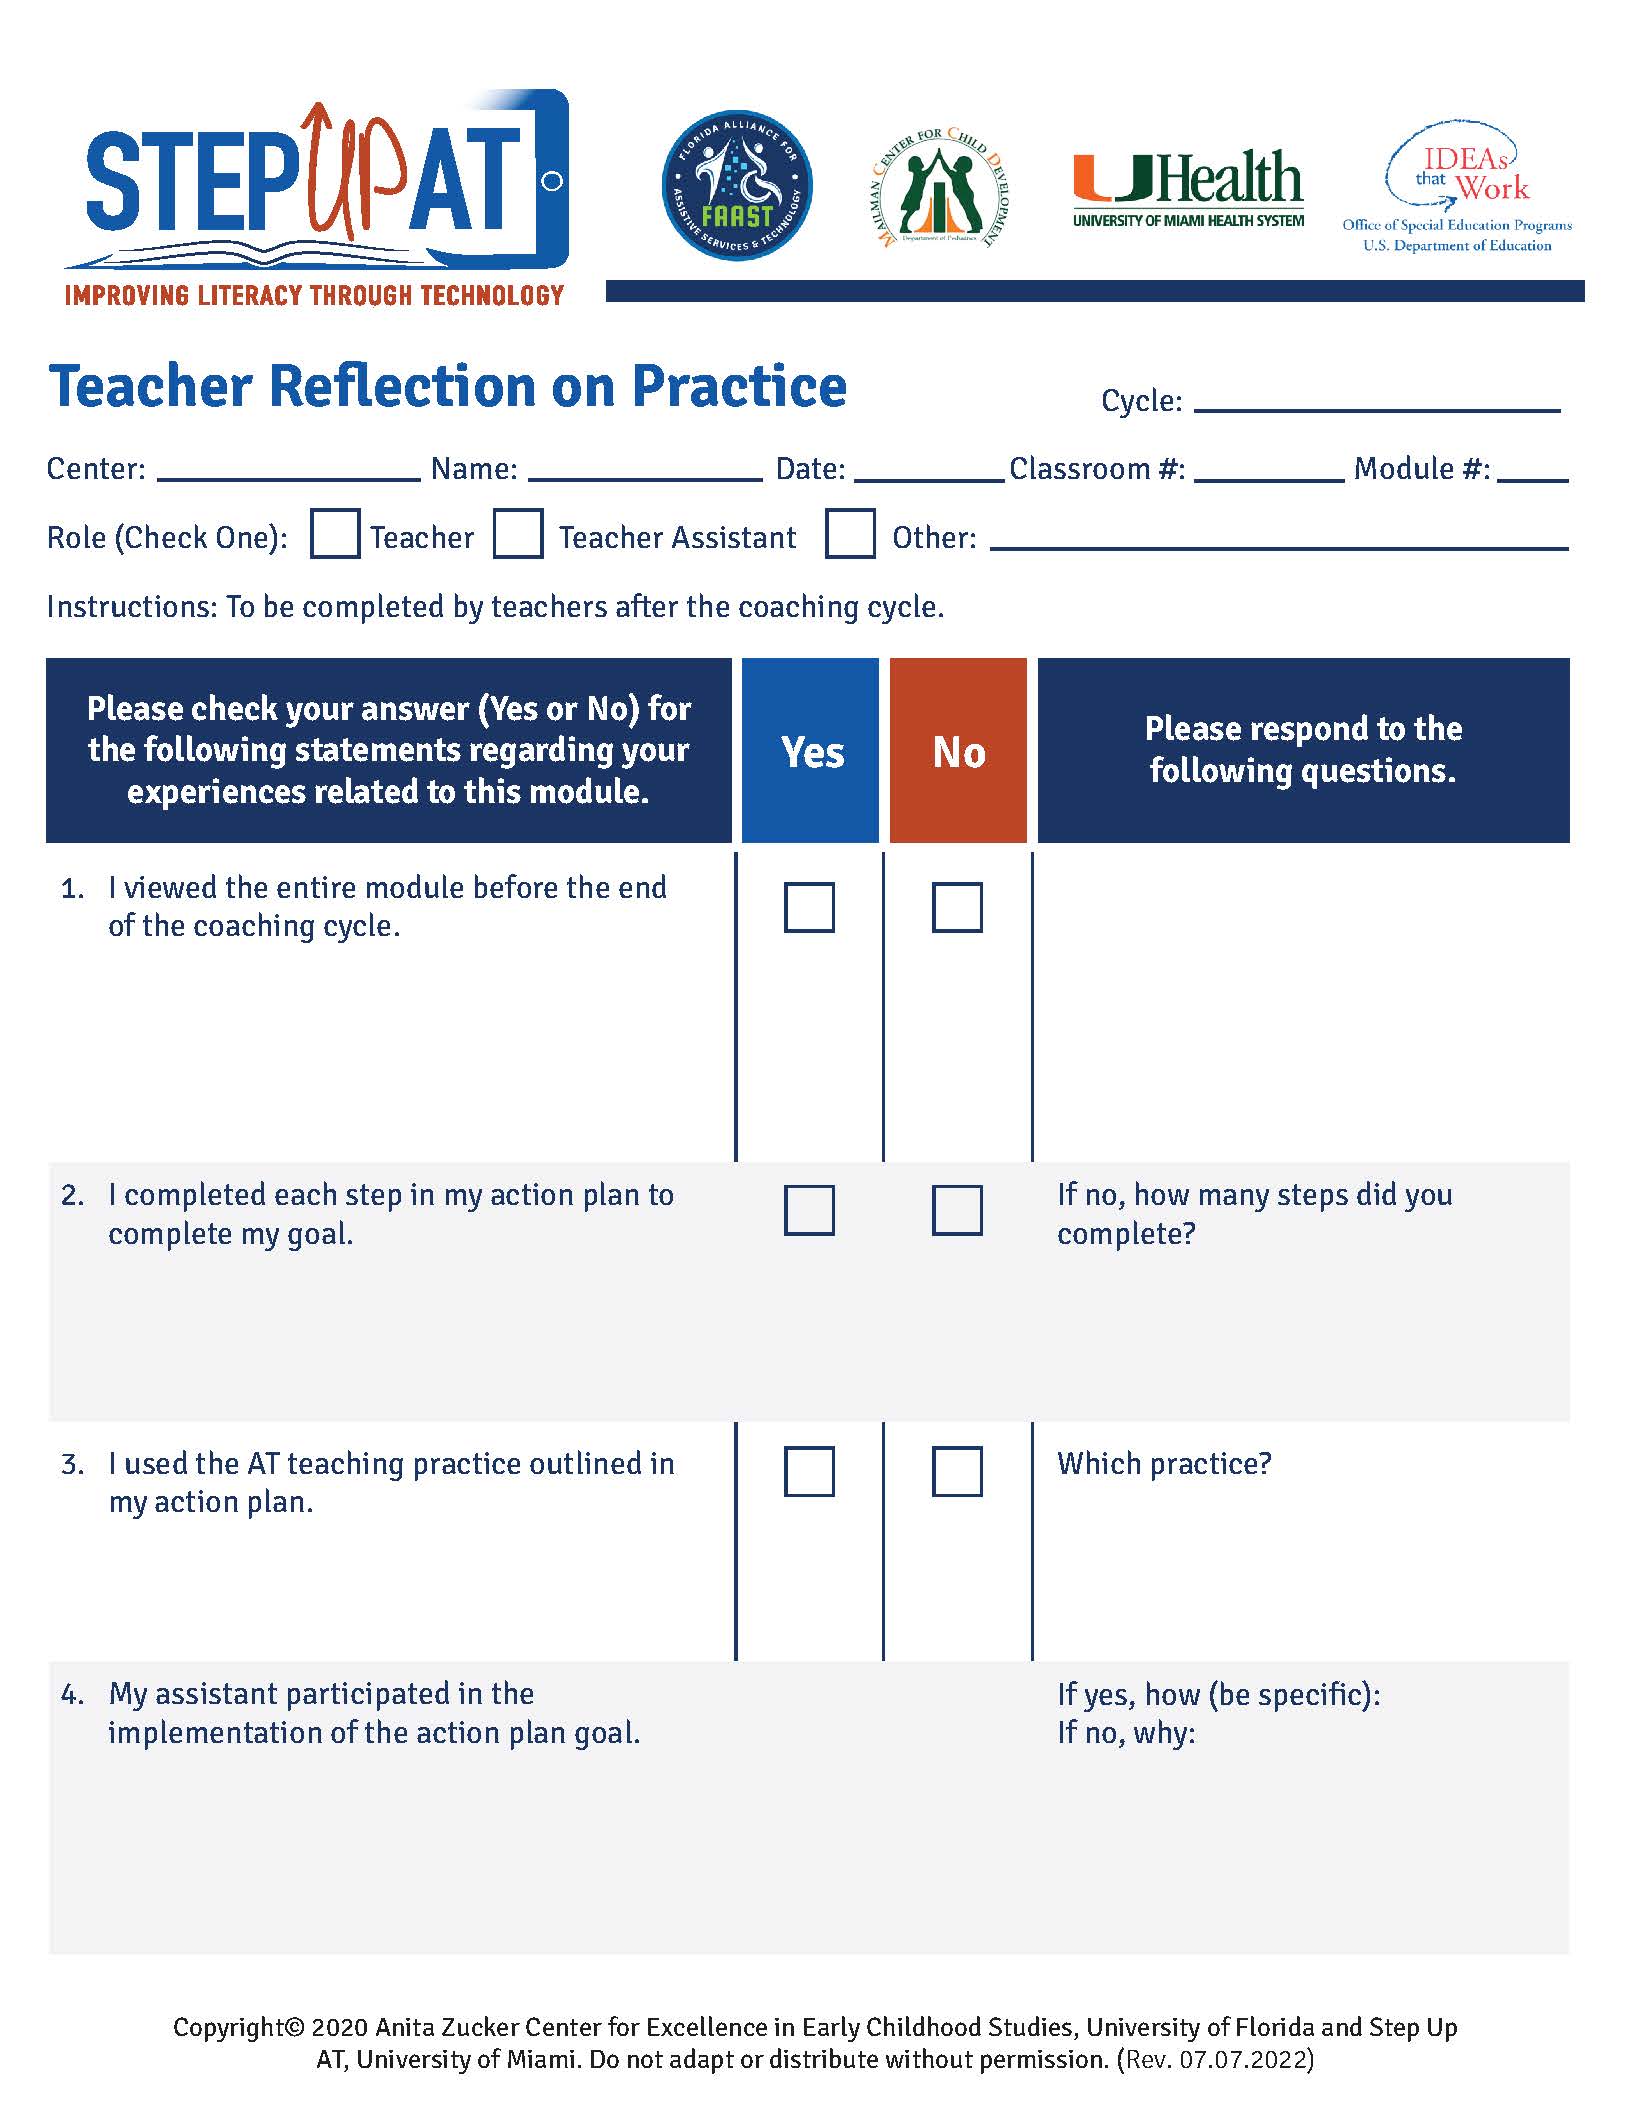 Step Up AT Teacher Reflection